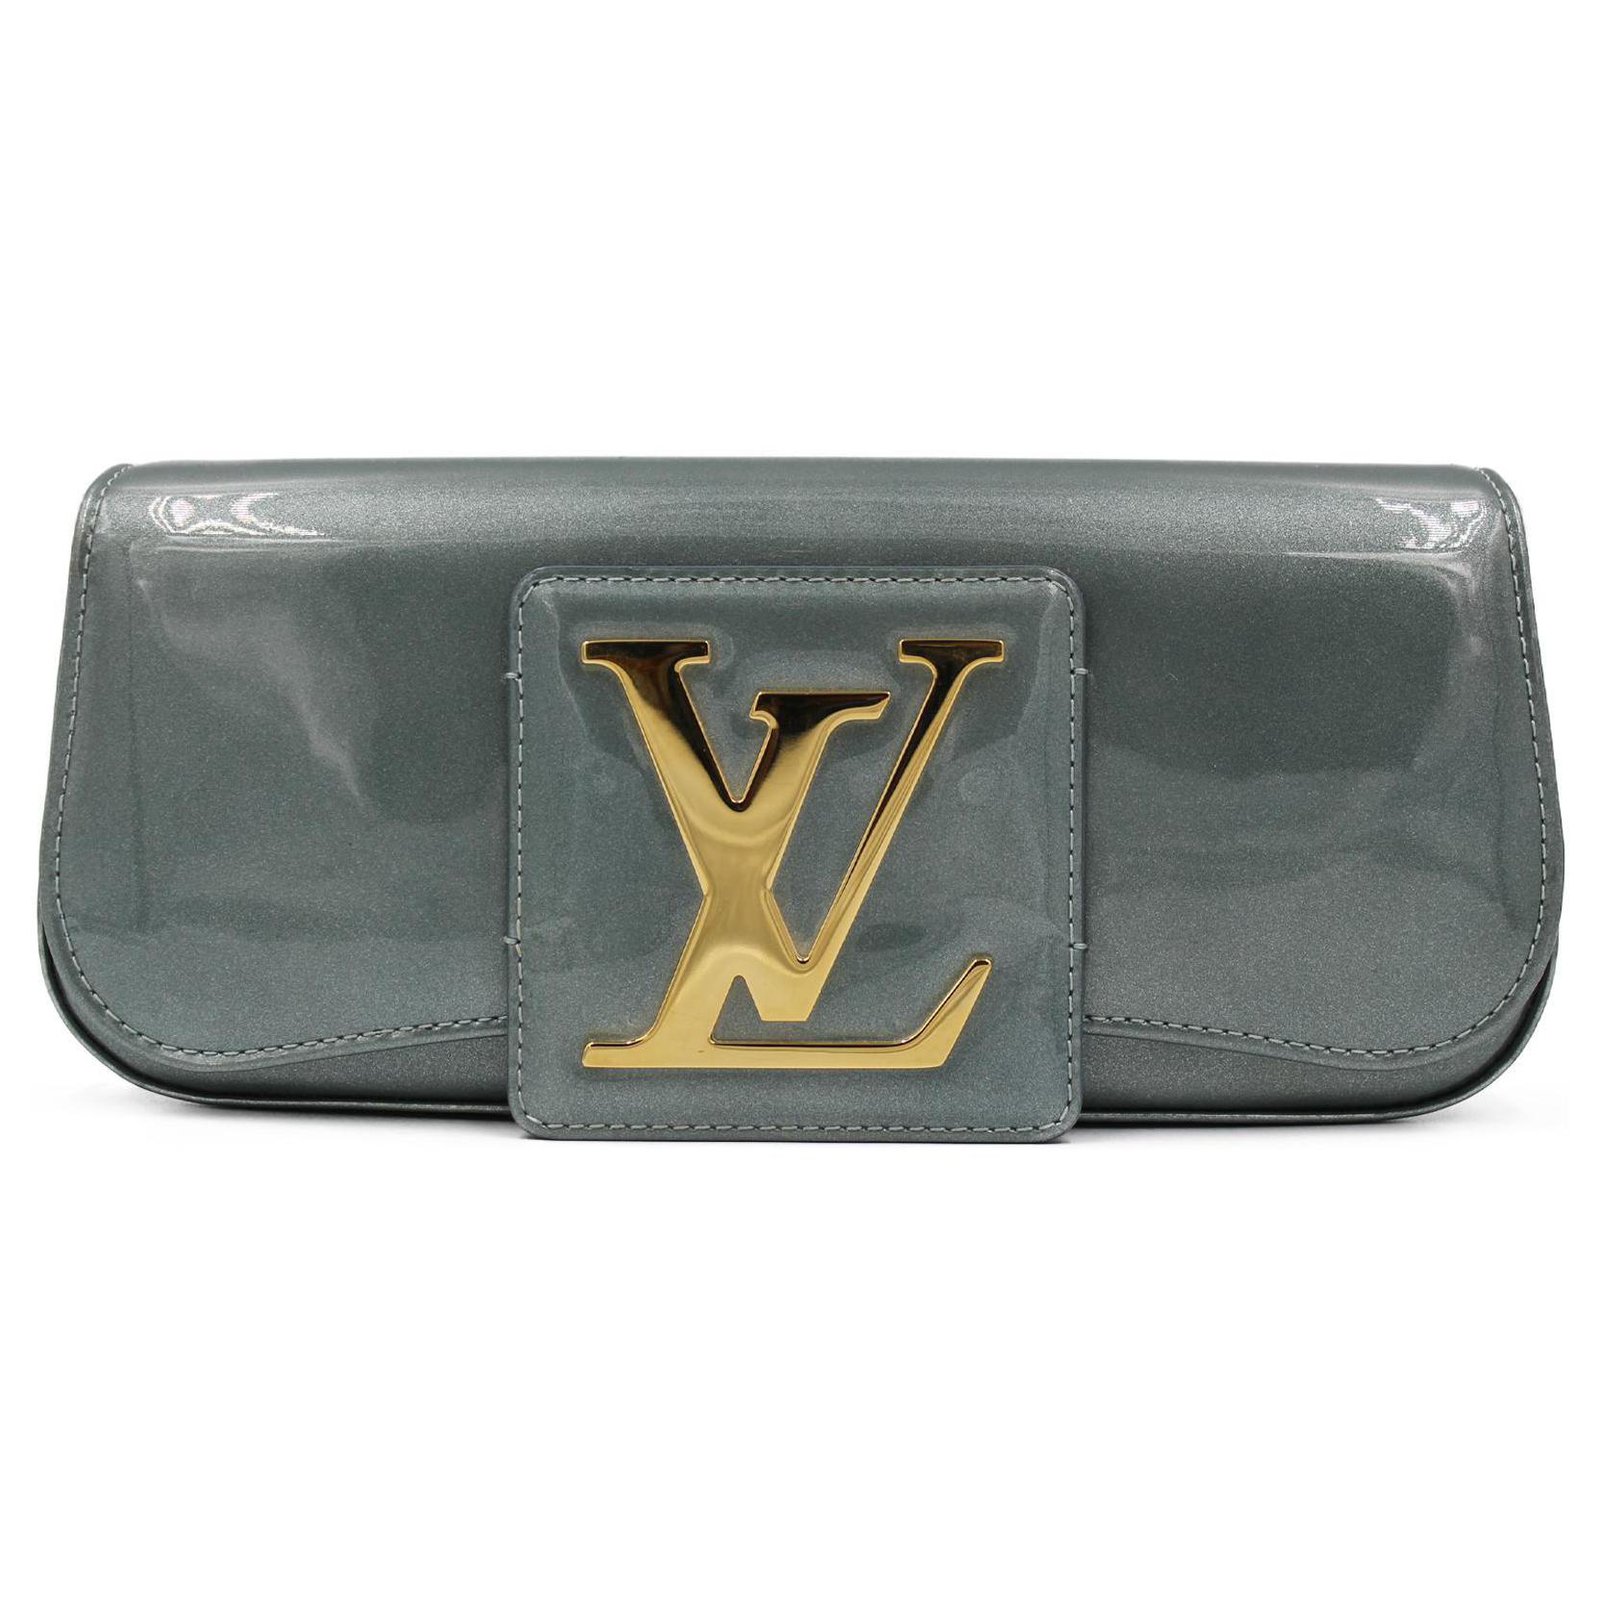 Louis Vuitton, Bags, Sobe Clutch